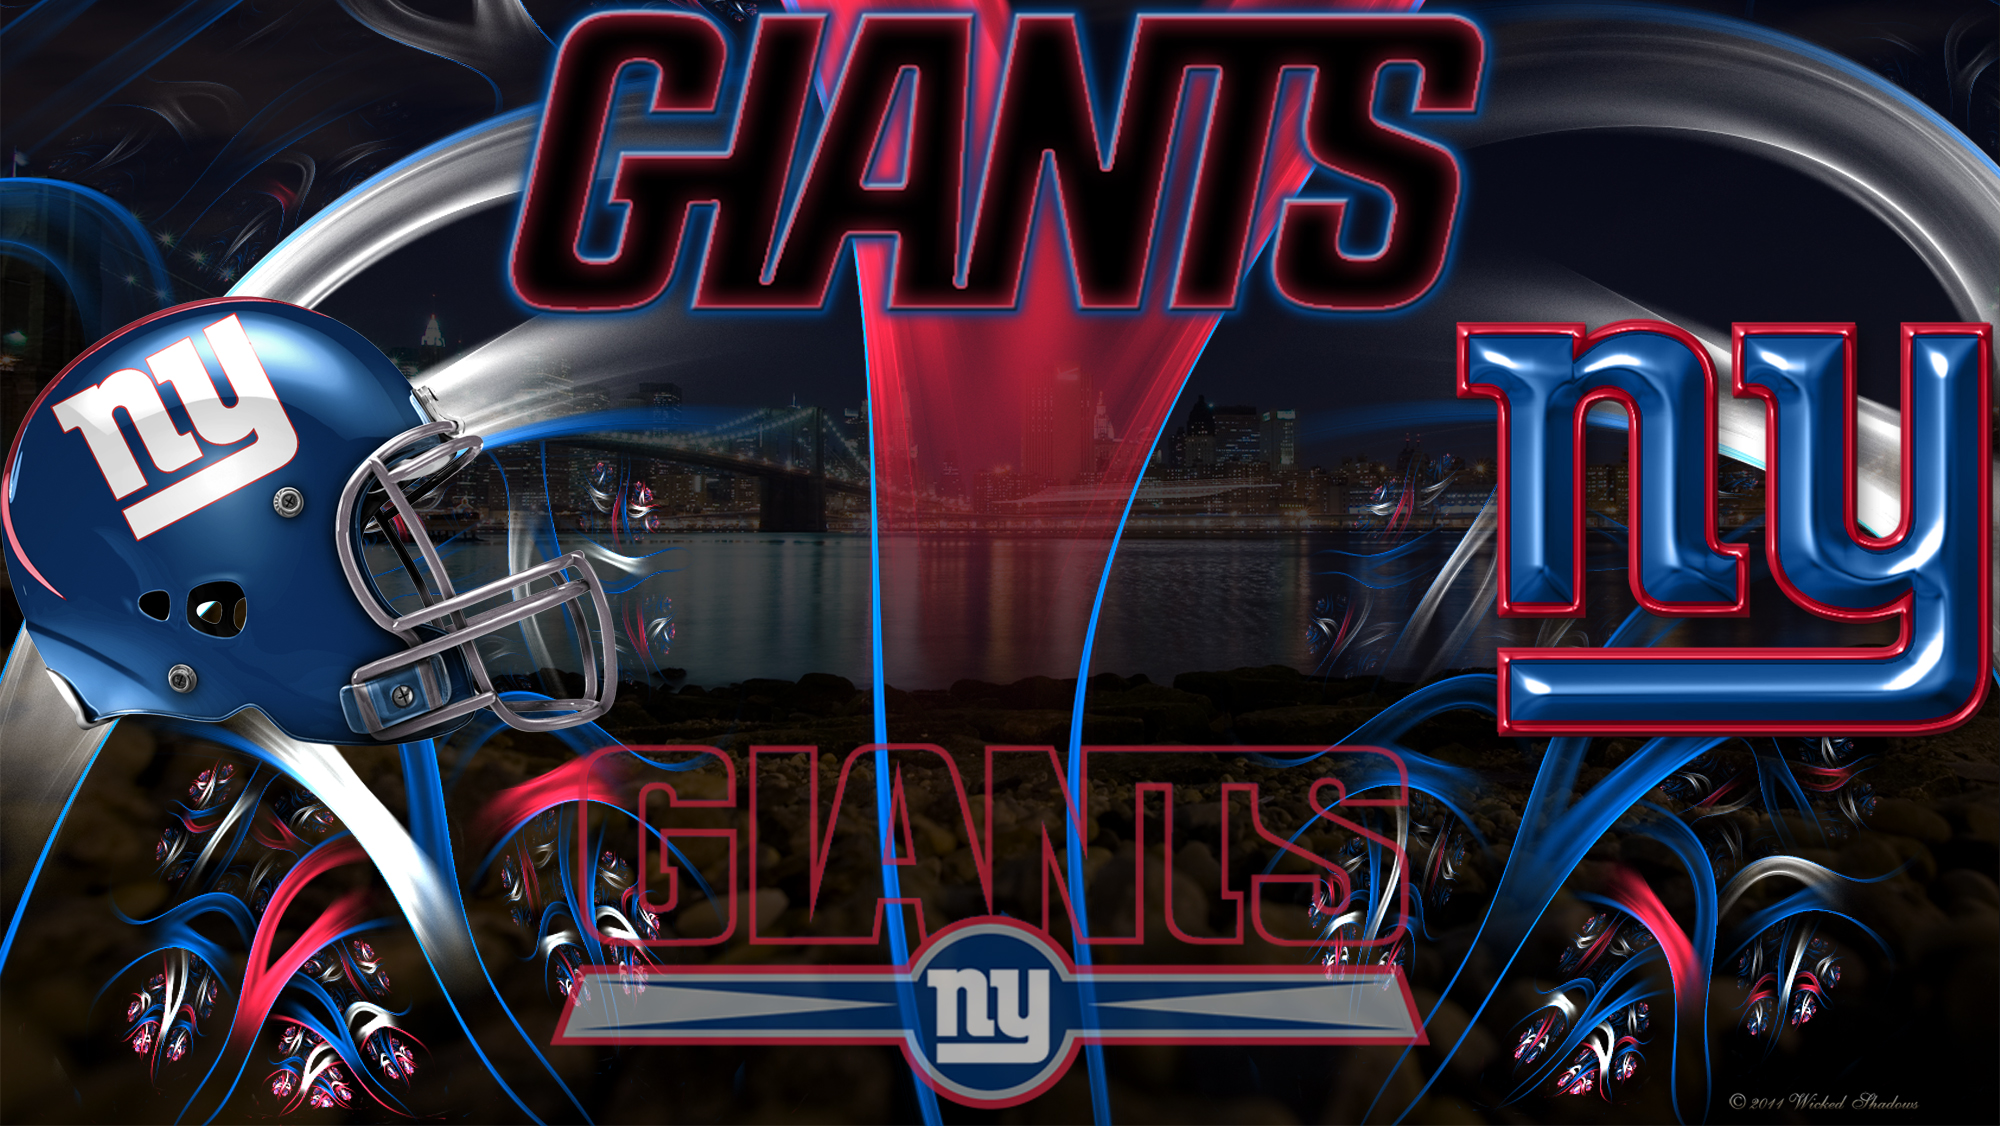 New York Giants images New York Giants wallpapers